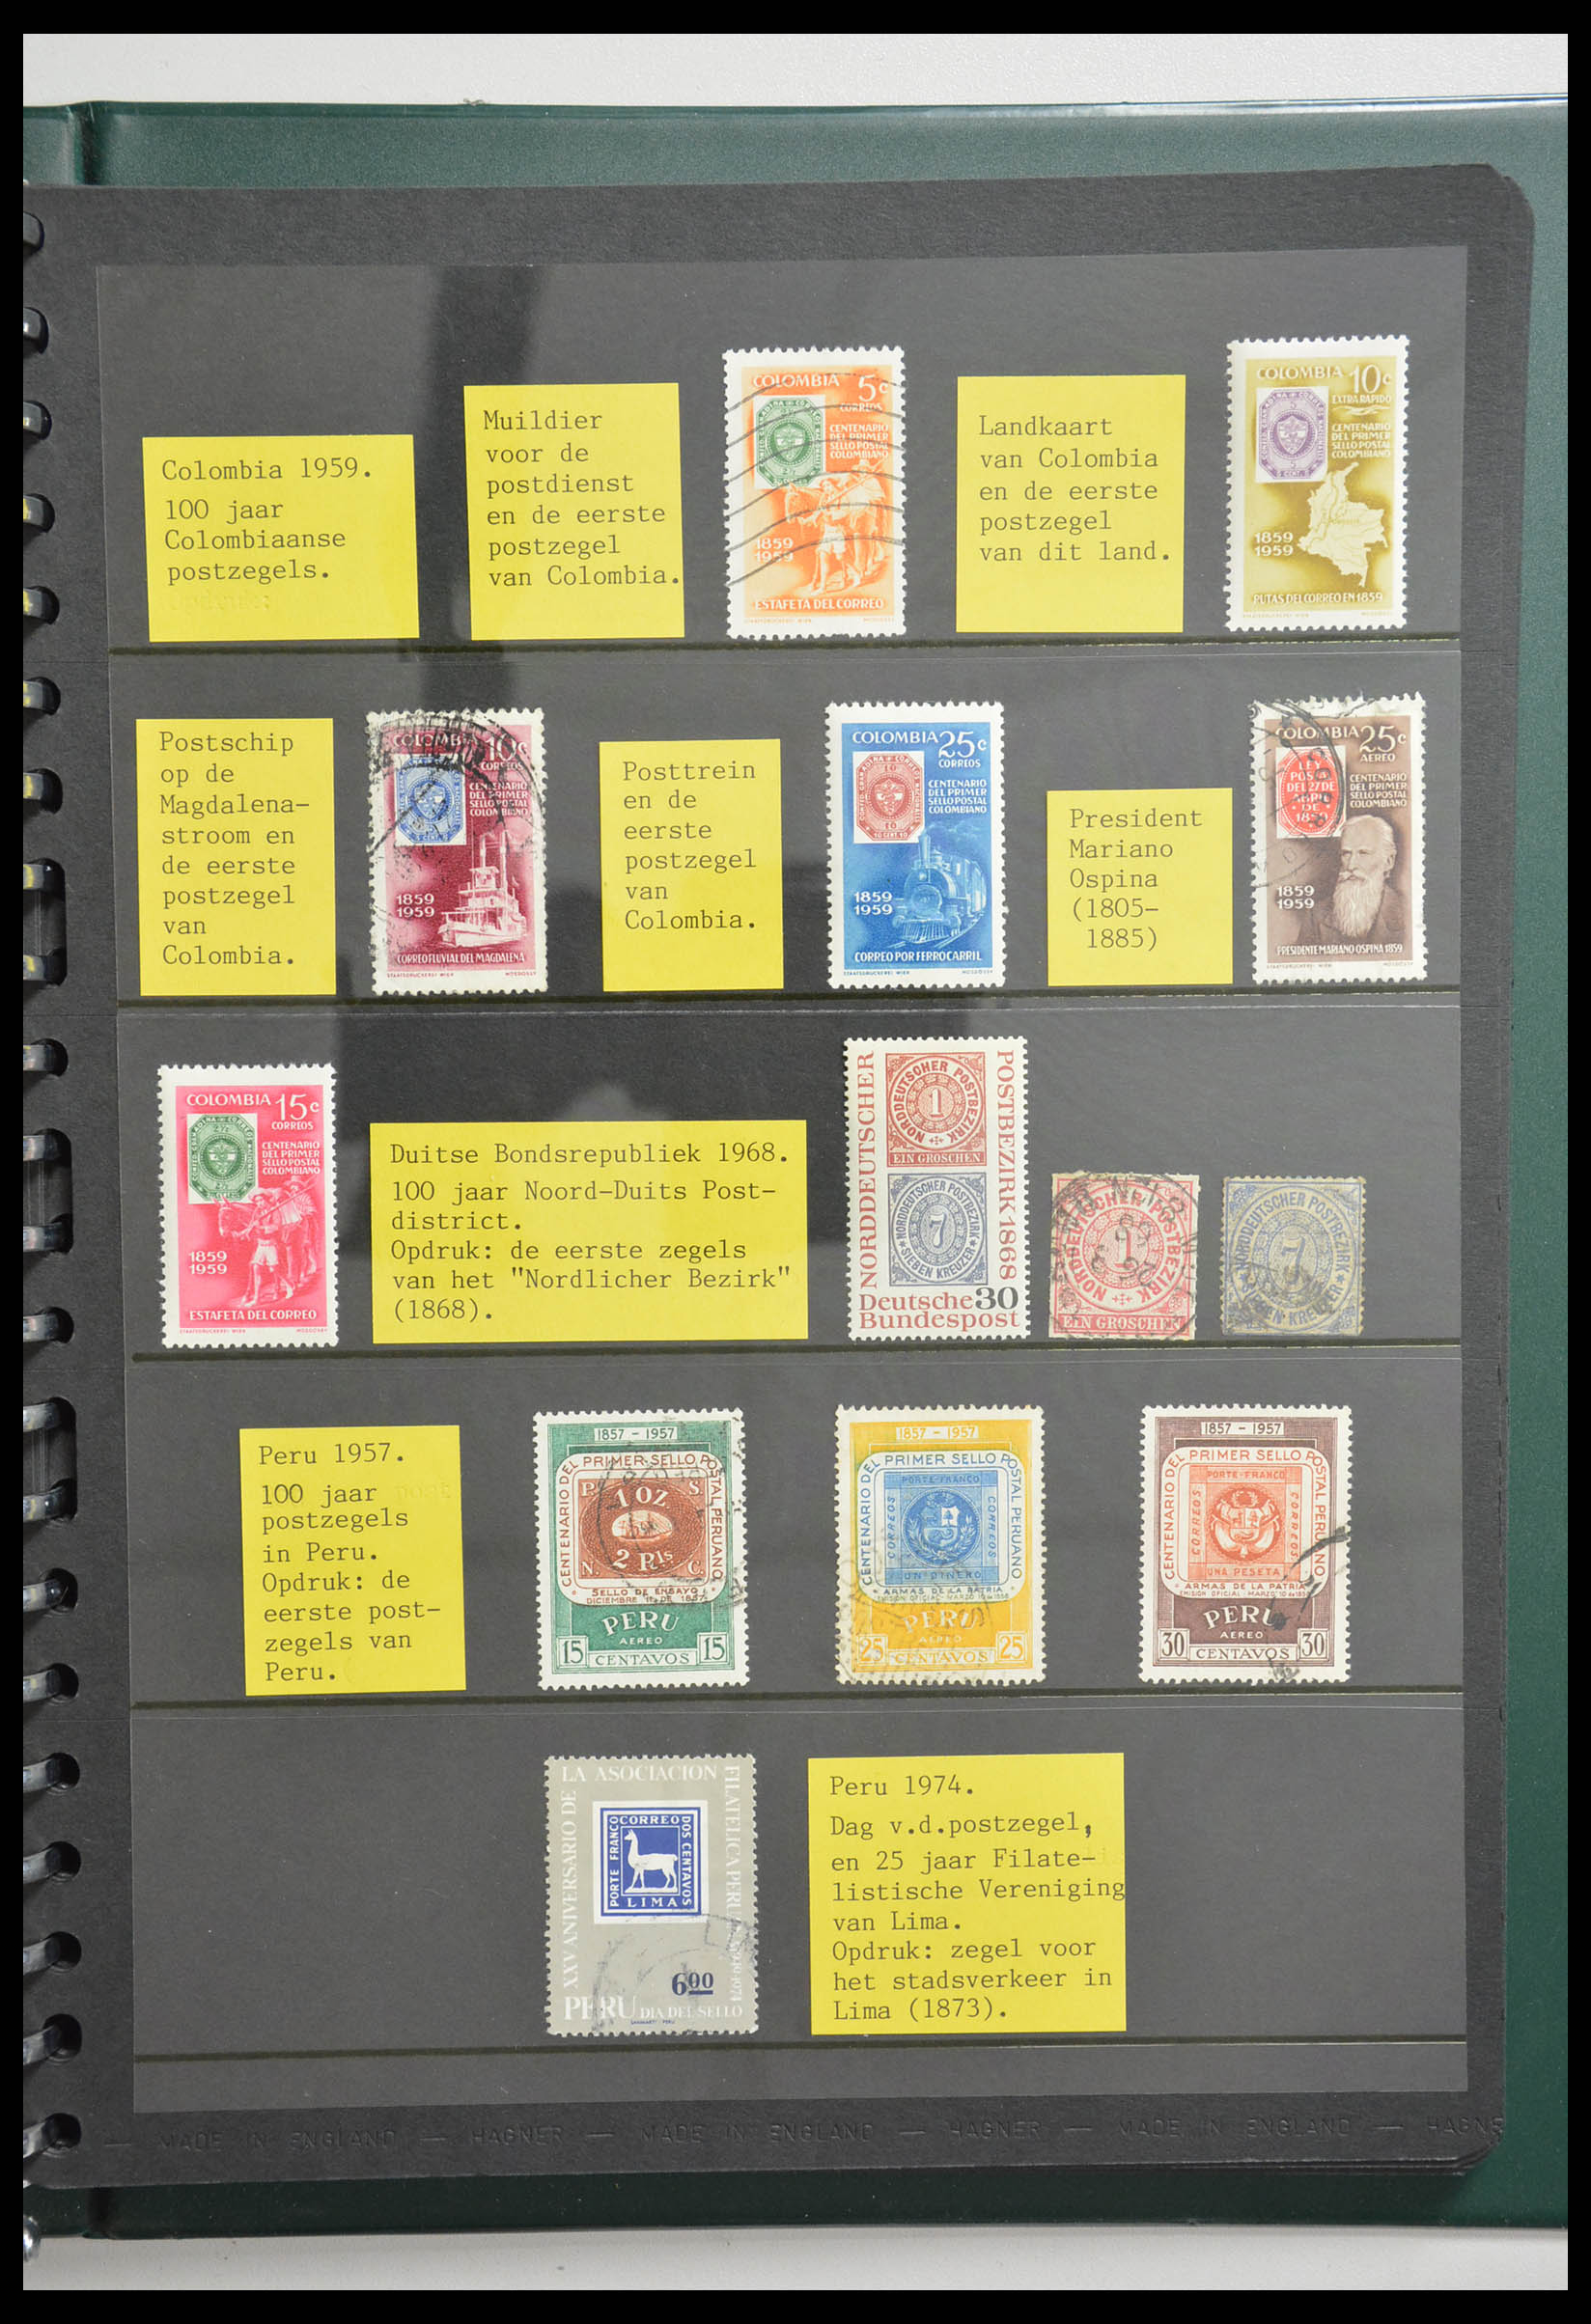 28337 118 - 28337 Postzegel op postzegel 1840-2001.